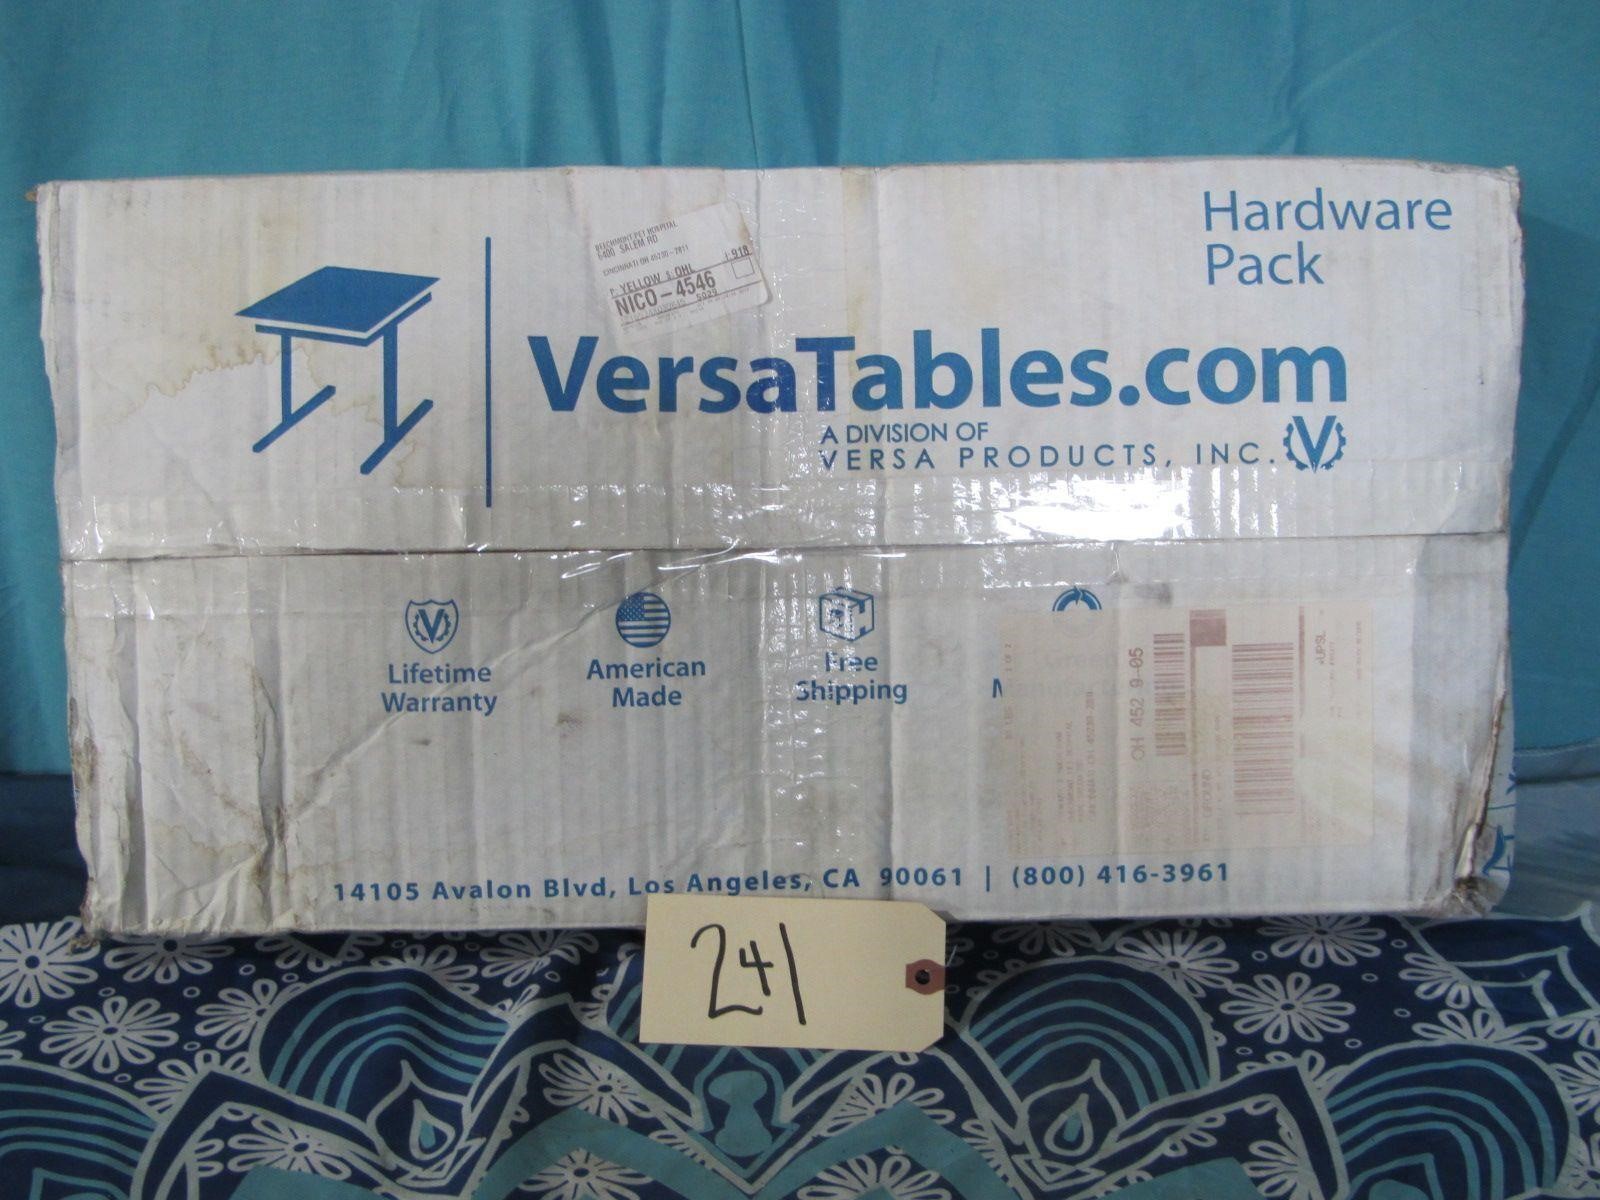 Versa Tables Desk Hardware Pack